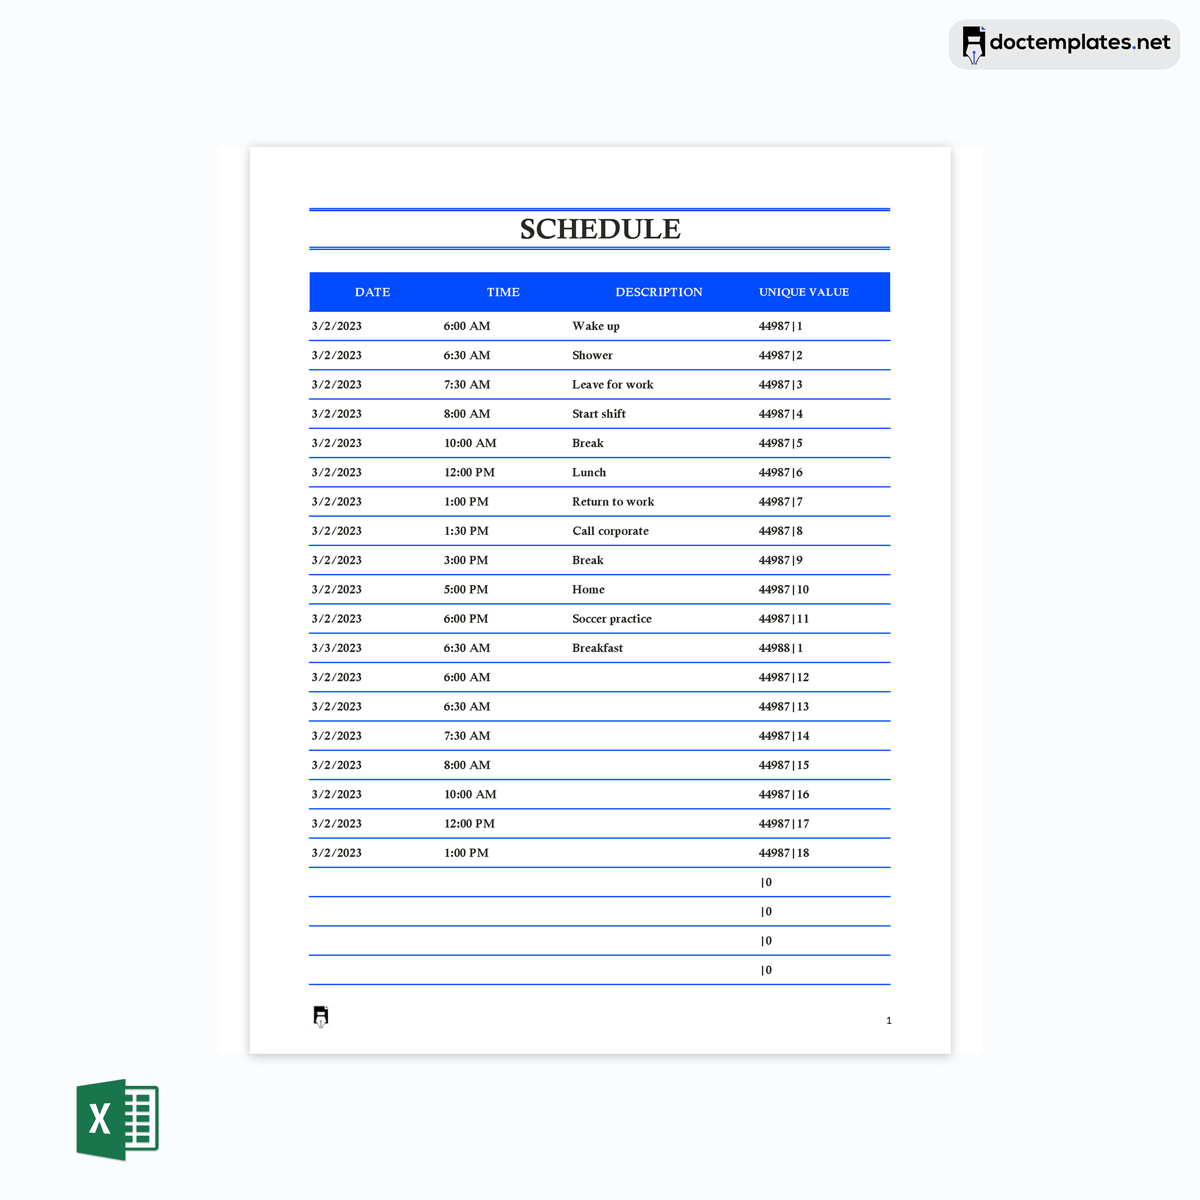 Weekly schedule template Excel
-4